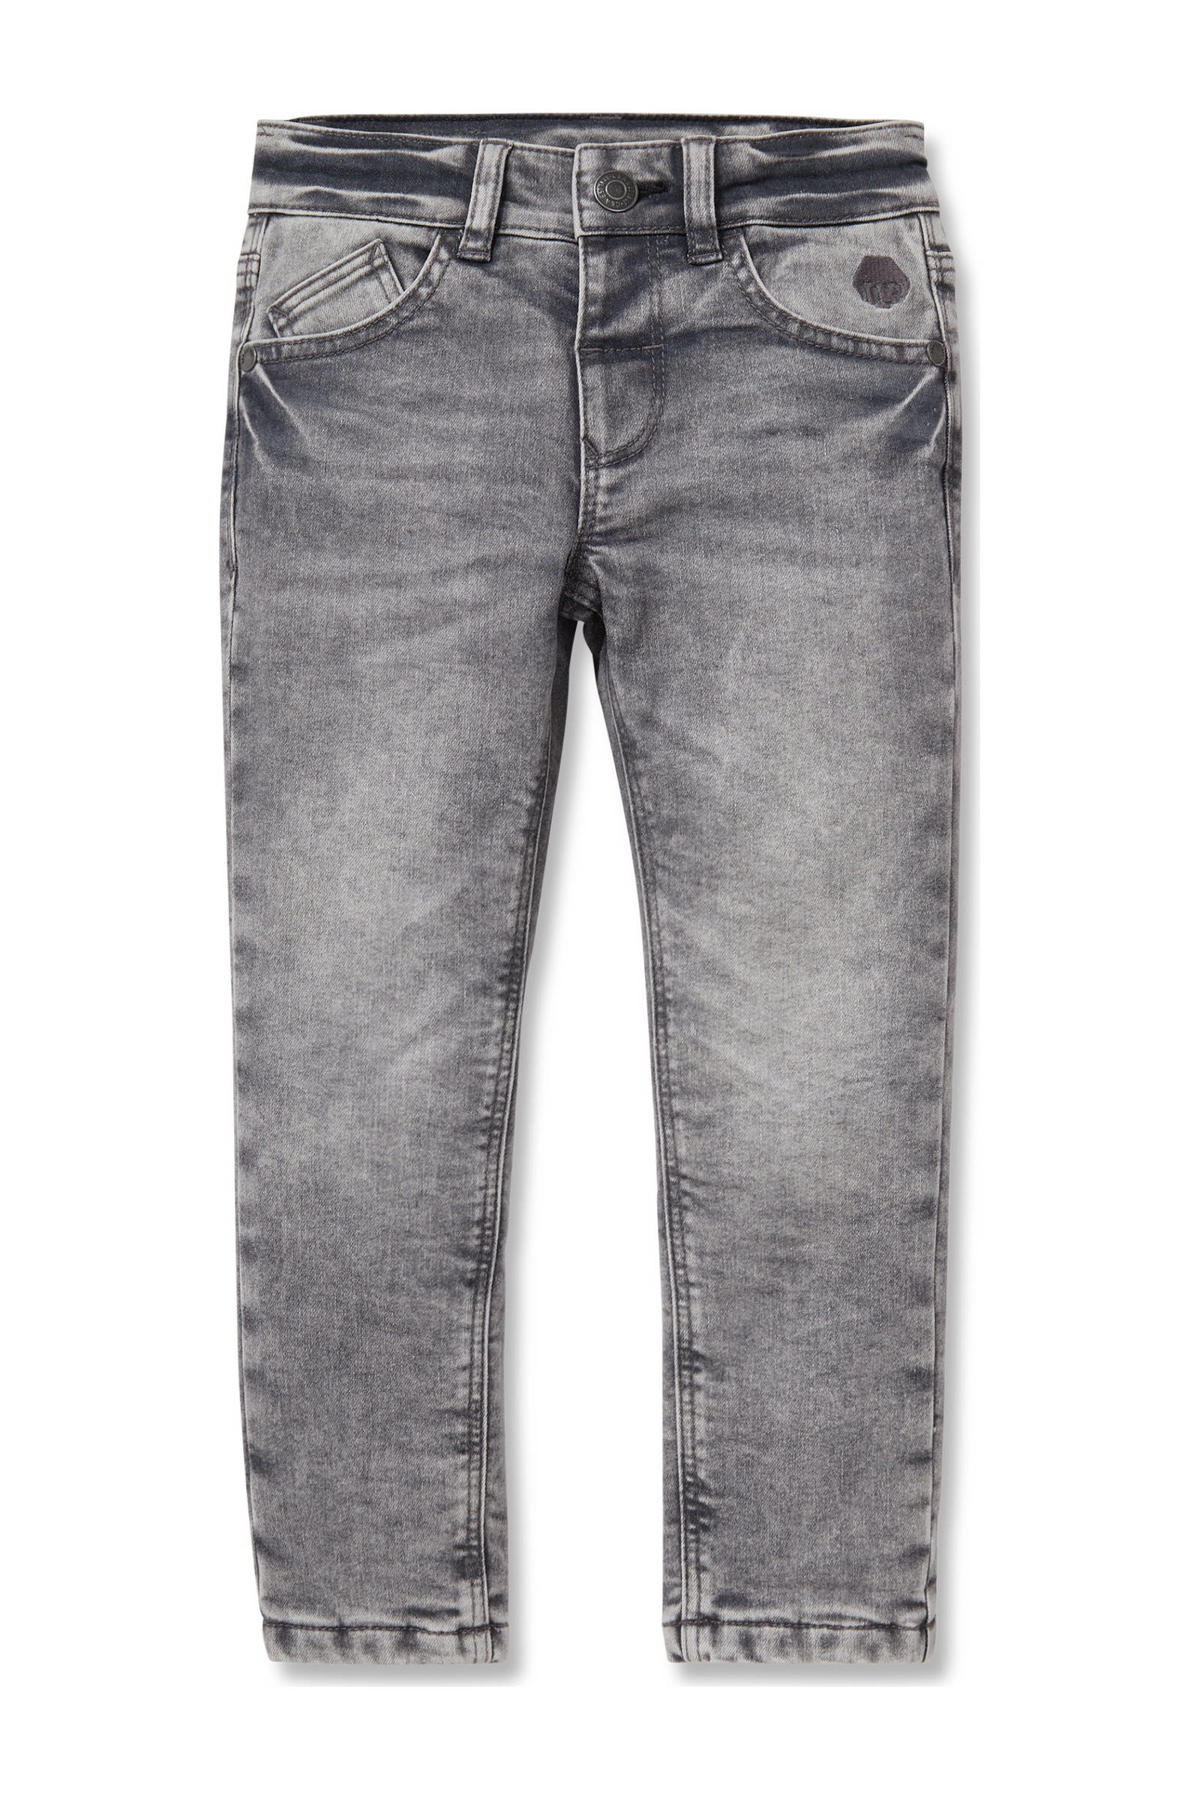 stortbui geschenk Minachting C&A slim fit thermo jeans grijs | wehkamp